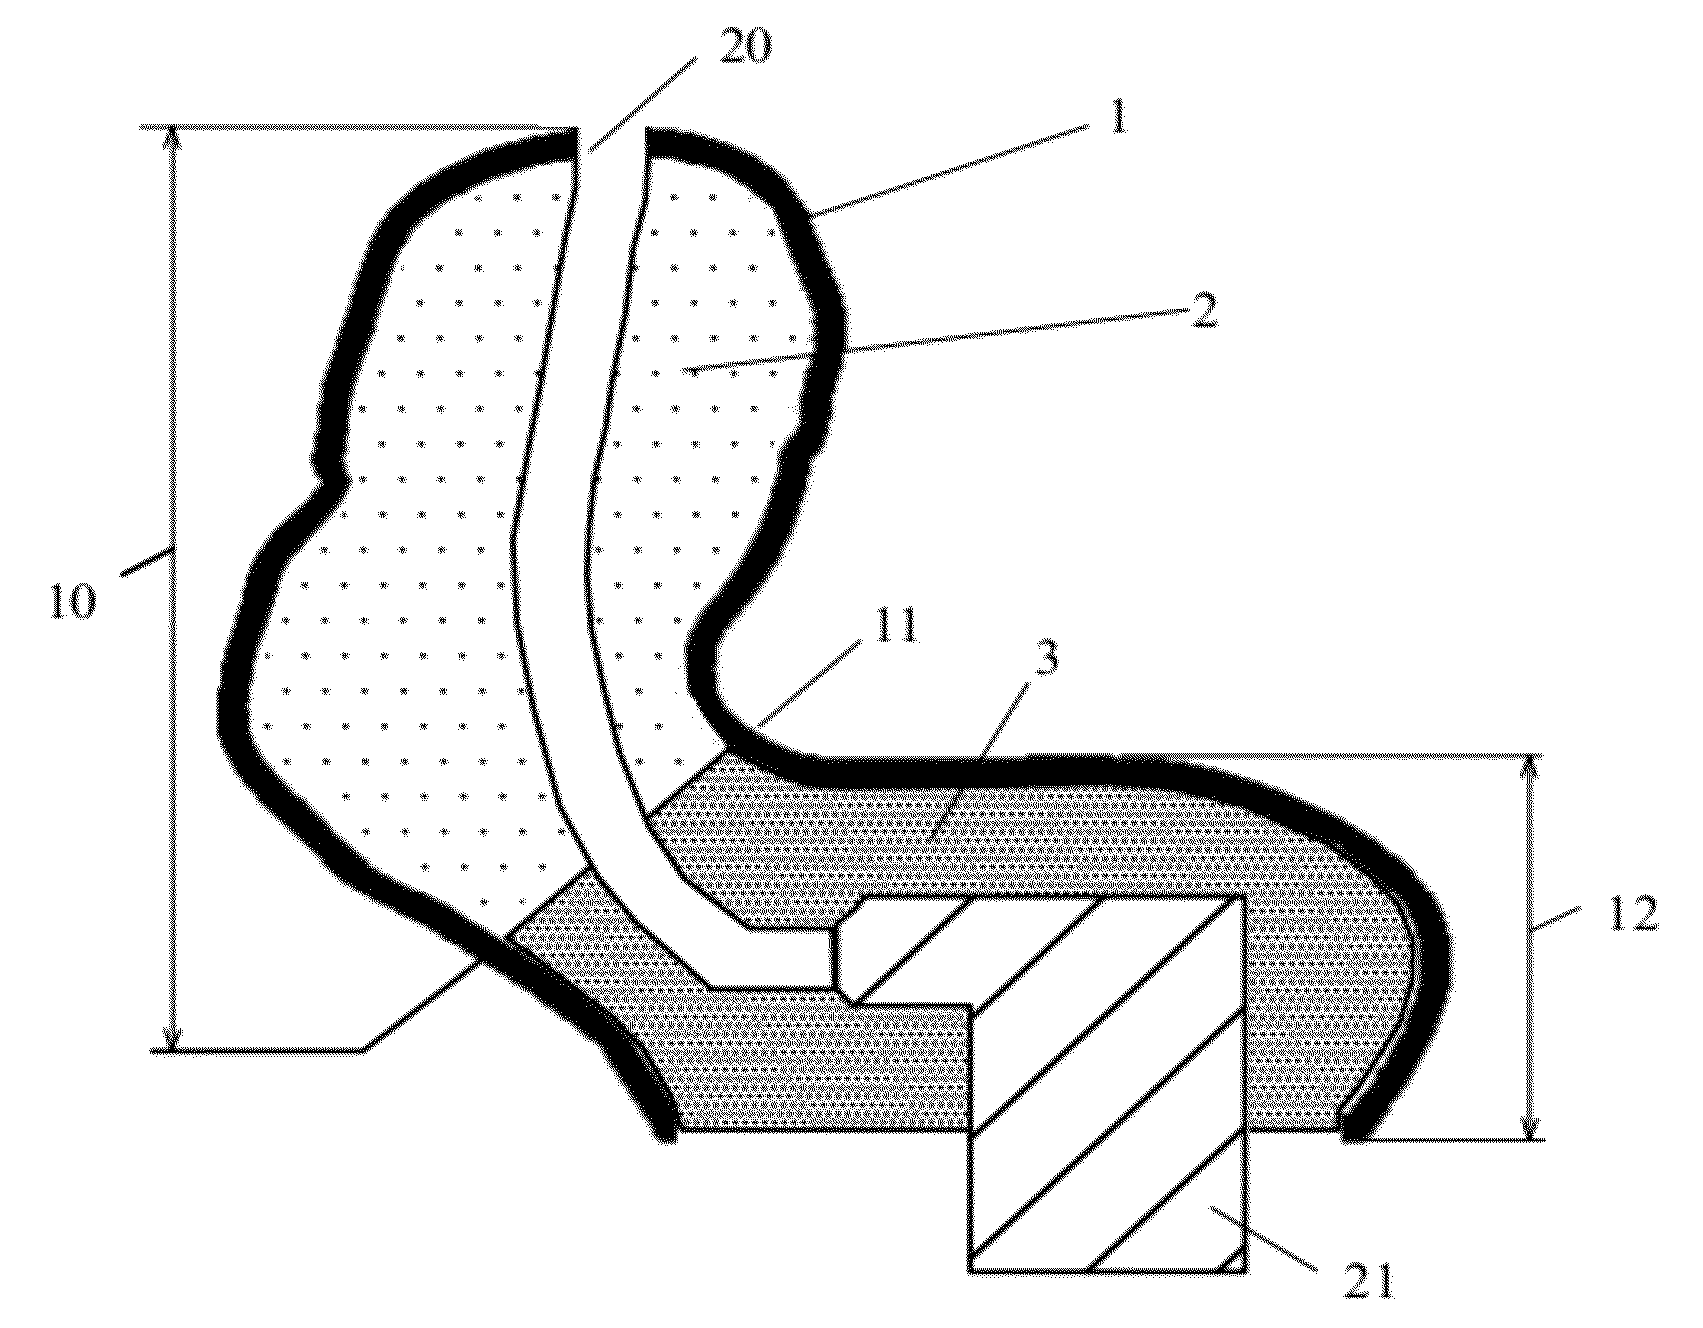 Concha-Fitting Custom Earplug with Flexible Skin and Filler Material